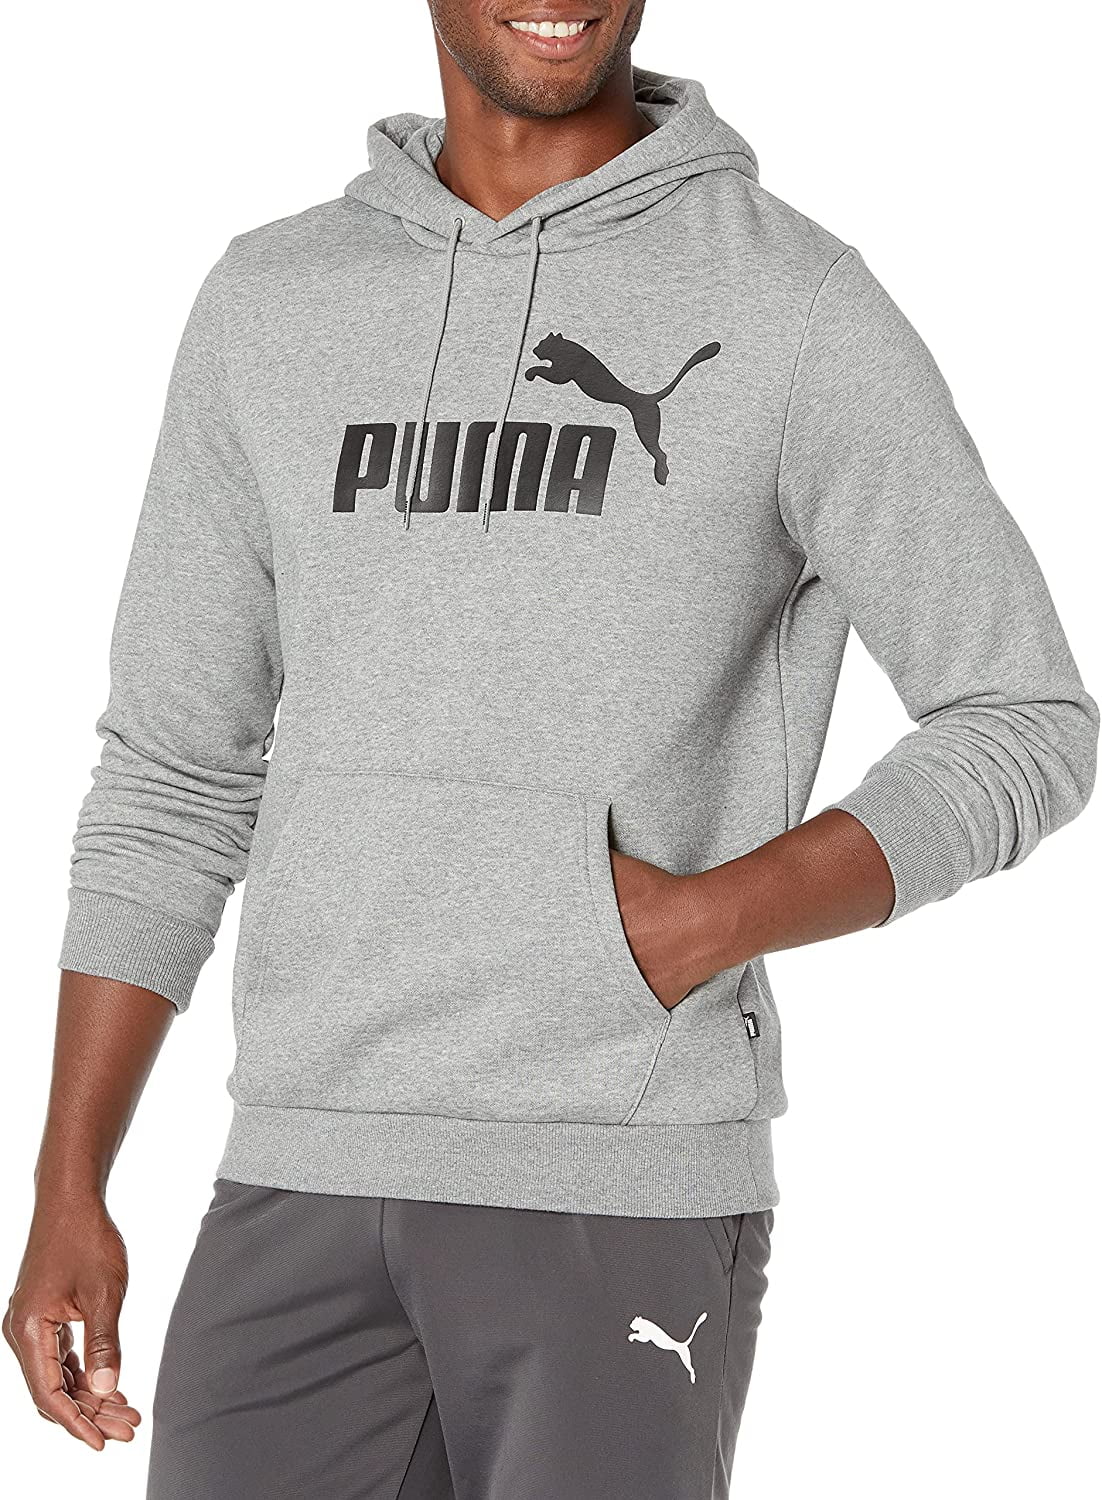 PUMA Mens Essentials Big Logo Fleece Hoodie Large Medium Gray Heather